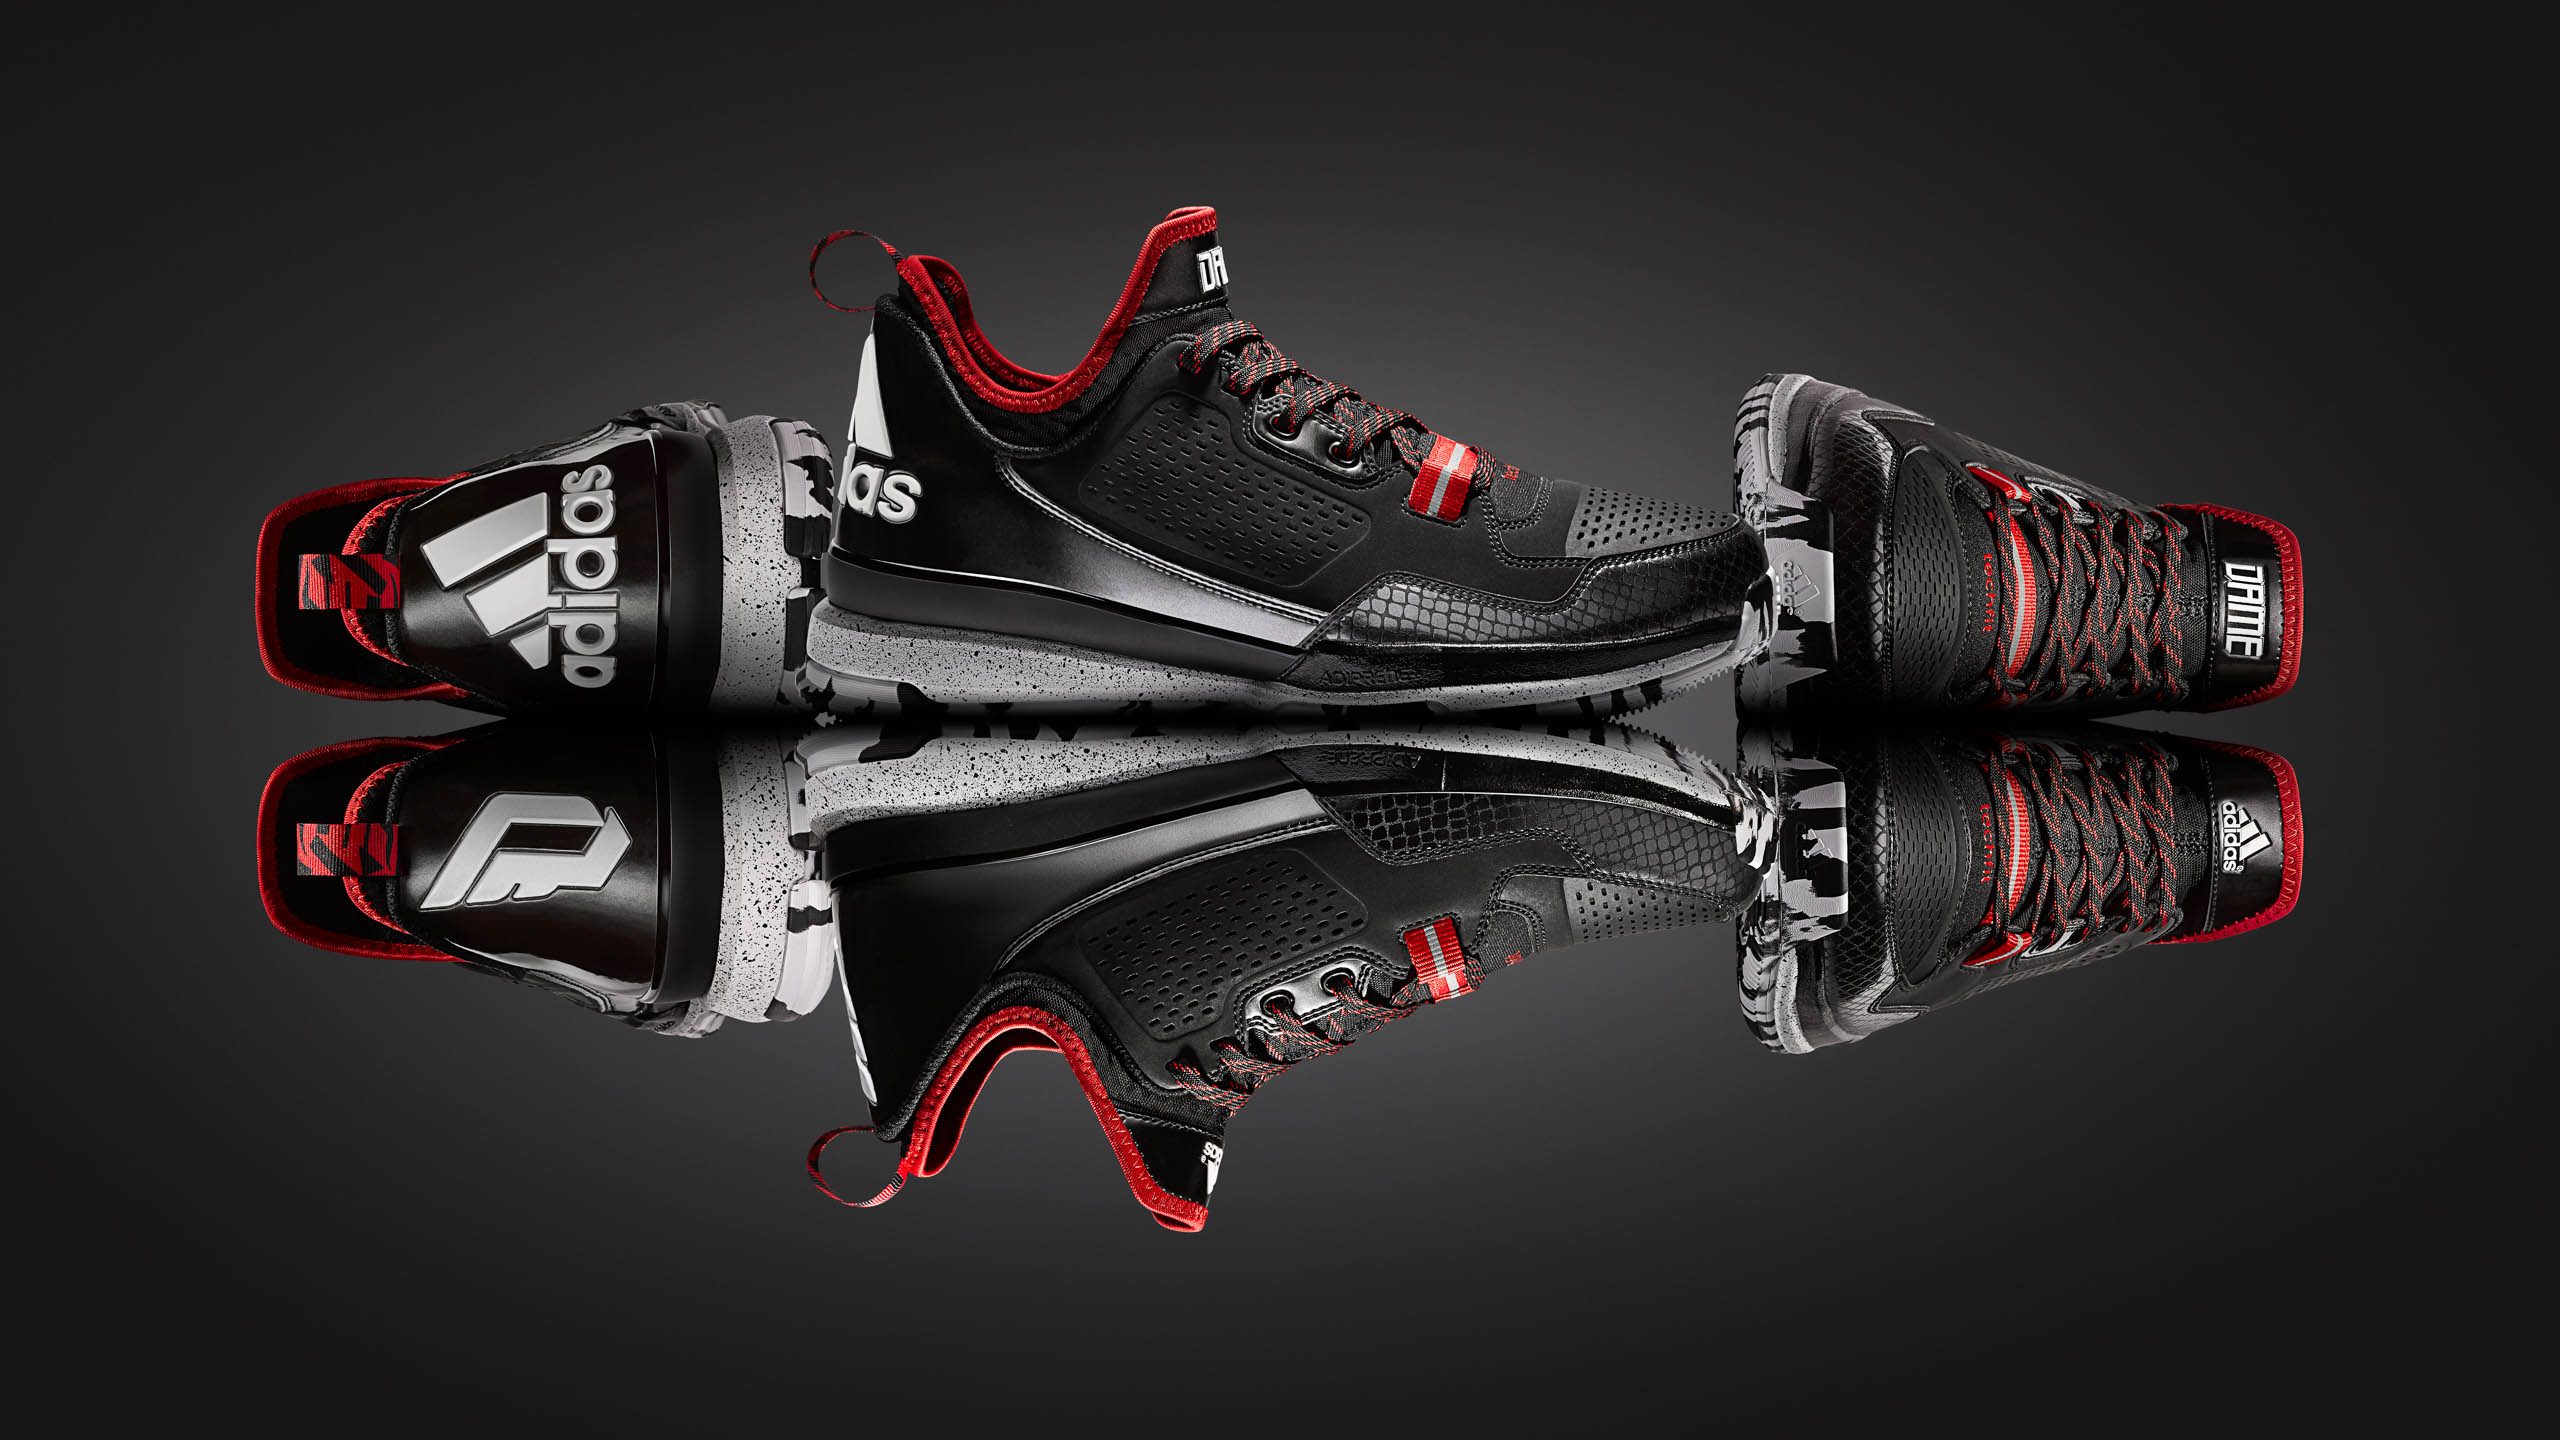 Adidas DLillard1 basketball shoe